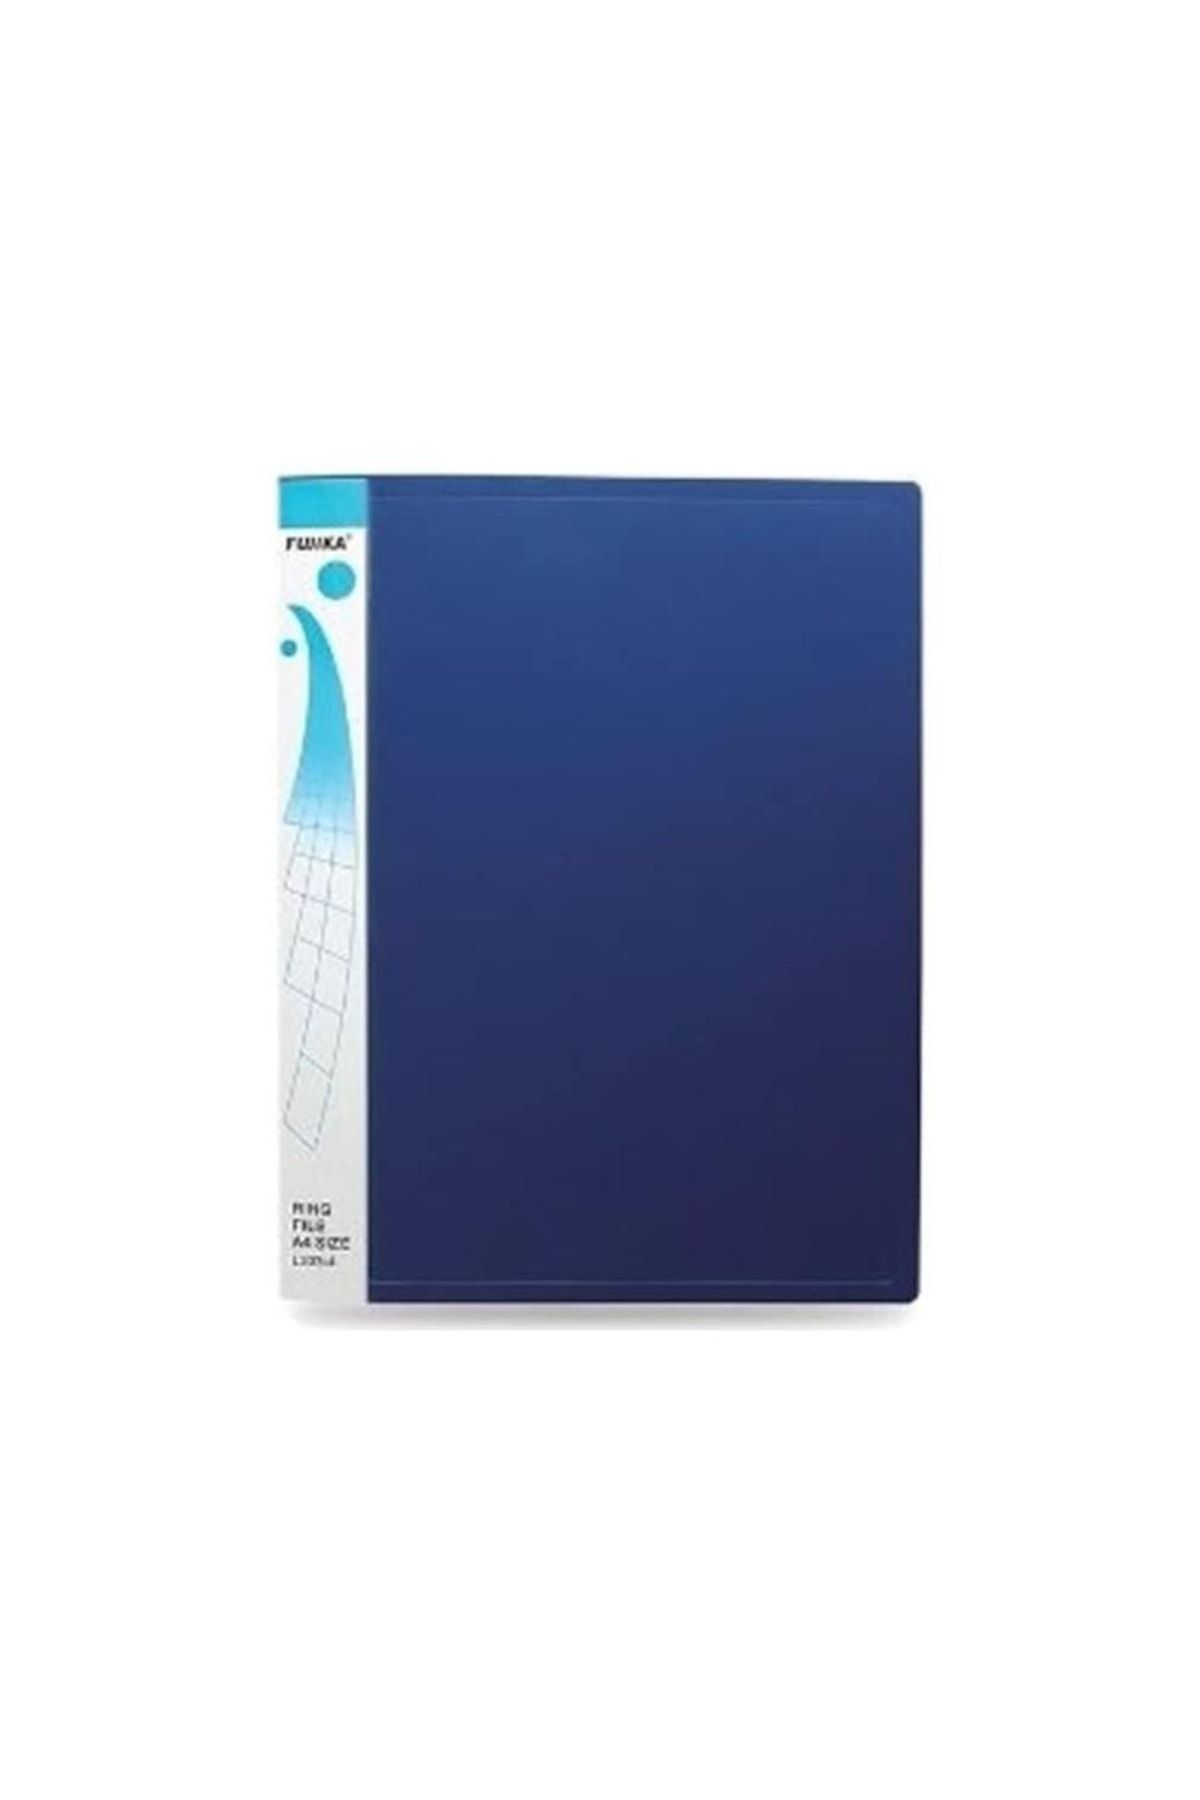 Fujika Katalog Sunum Dosyası 30 Kapasiteli A4 Mavi